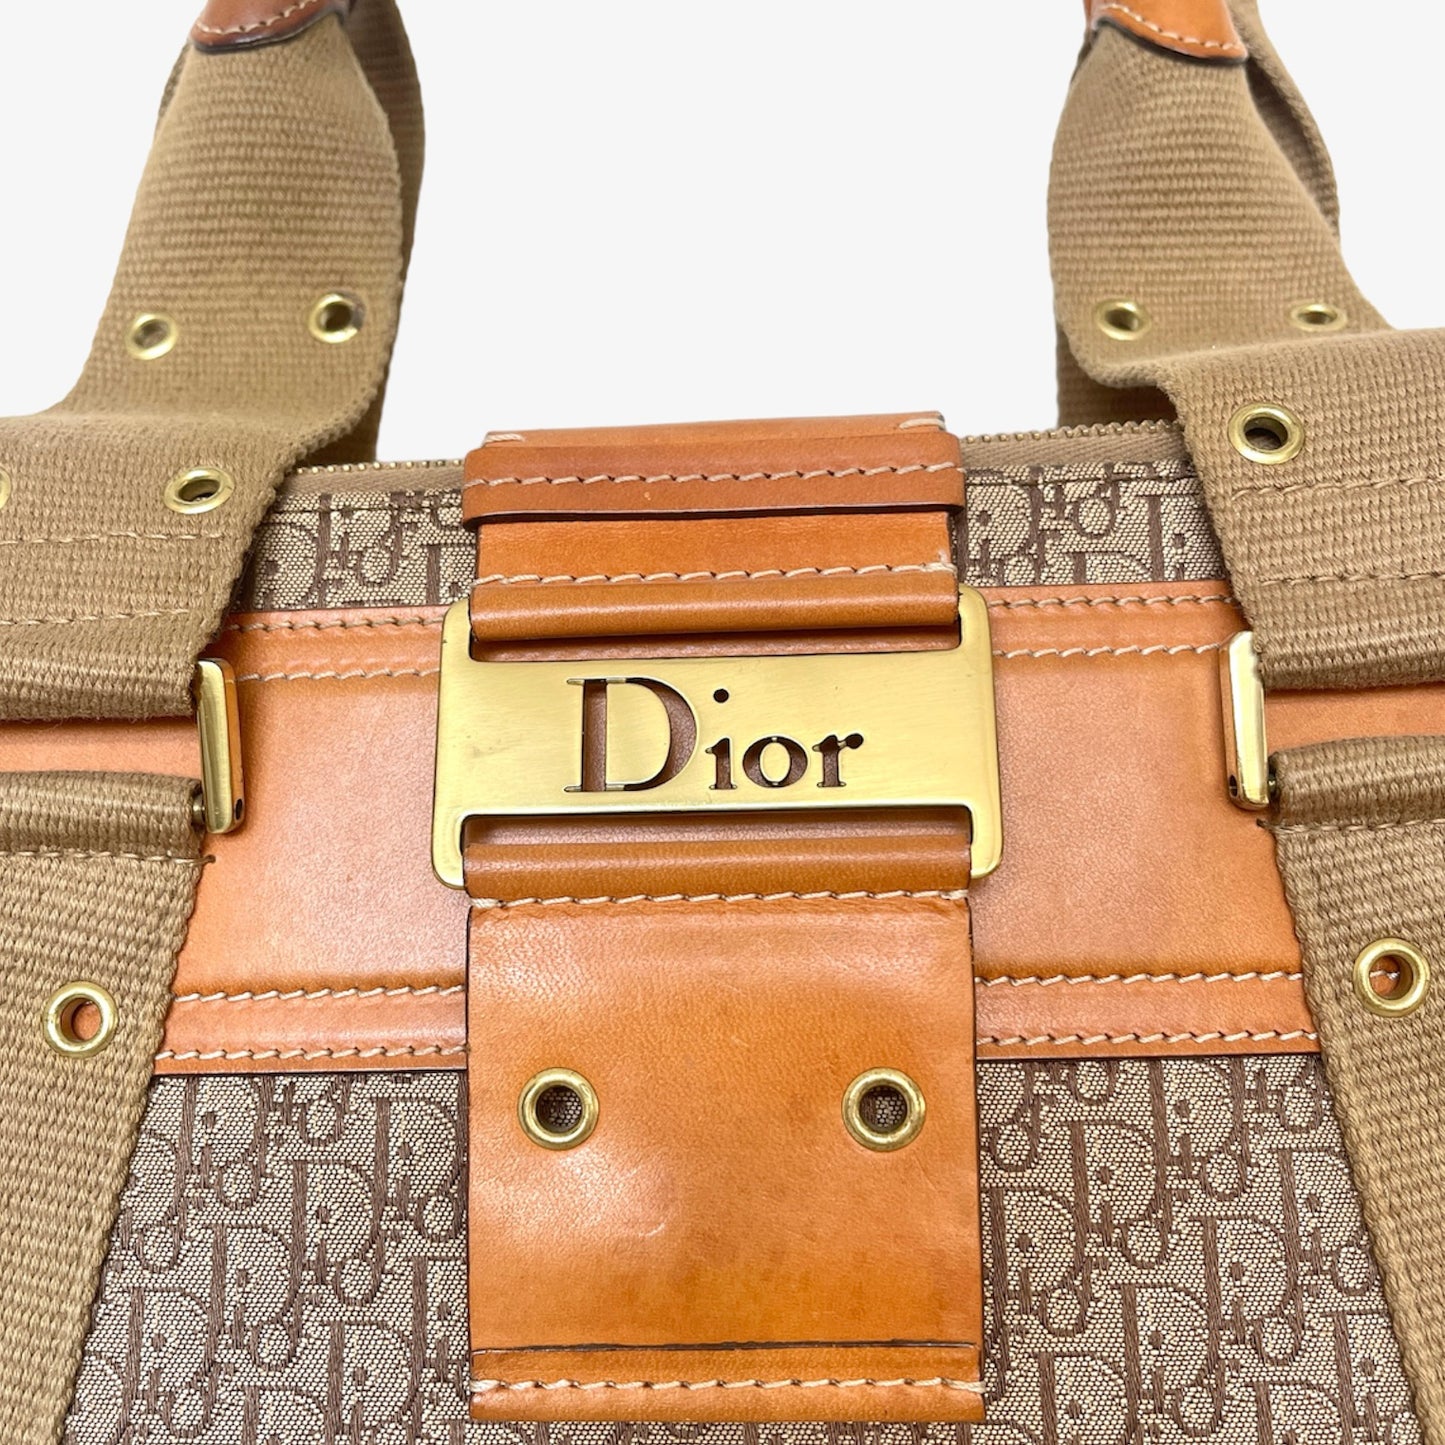 Christian Dior Street Chic trotter handbag.